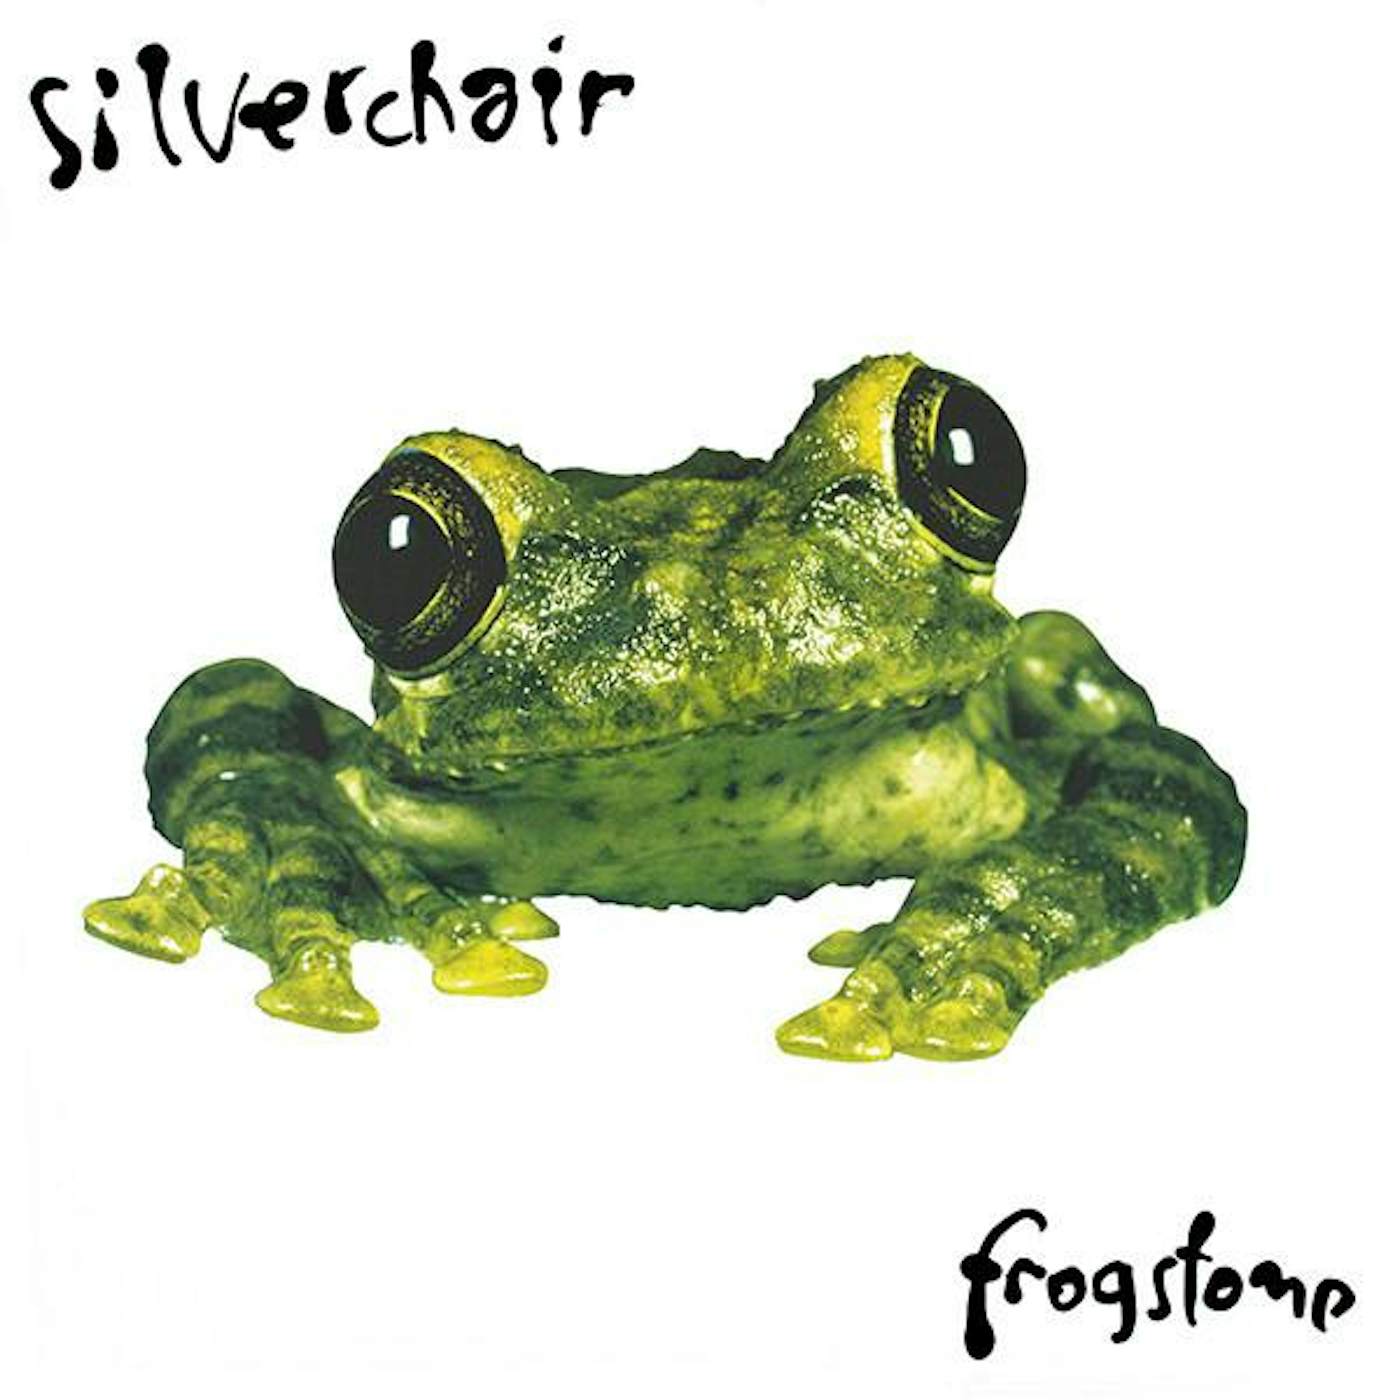 Silverchair FROGSTOMP (LIMITED EDITION YELLOW VINYL) Vinyl Record